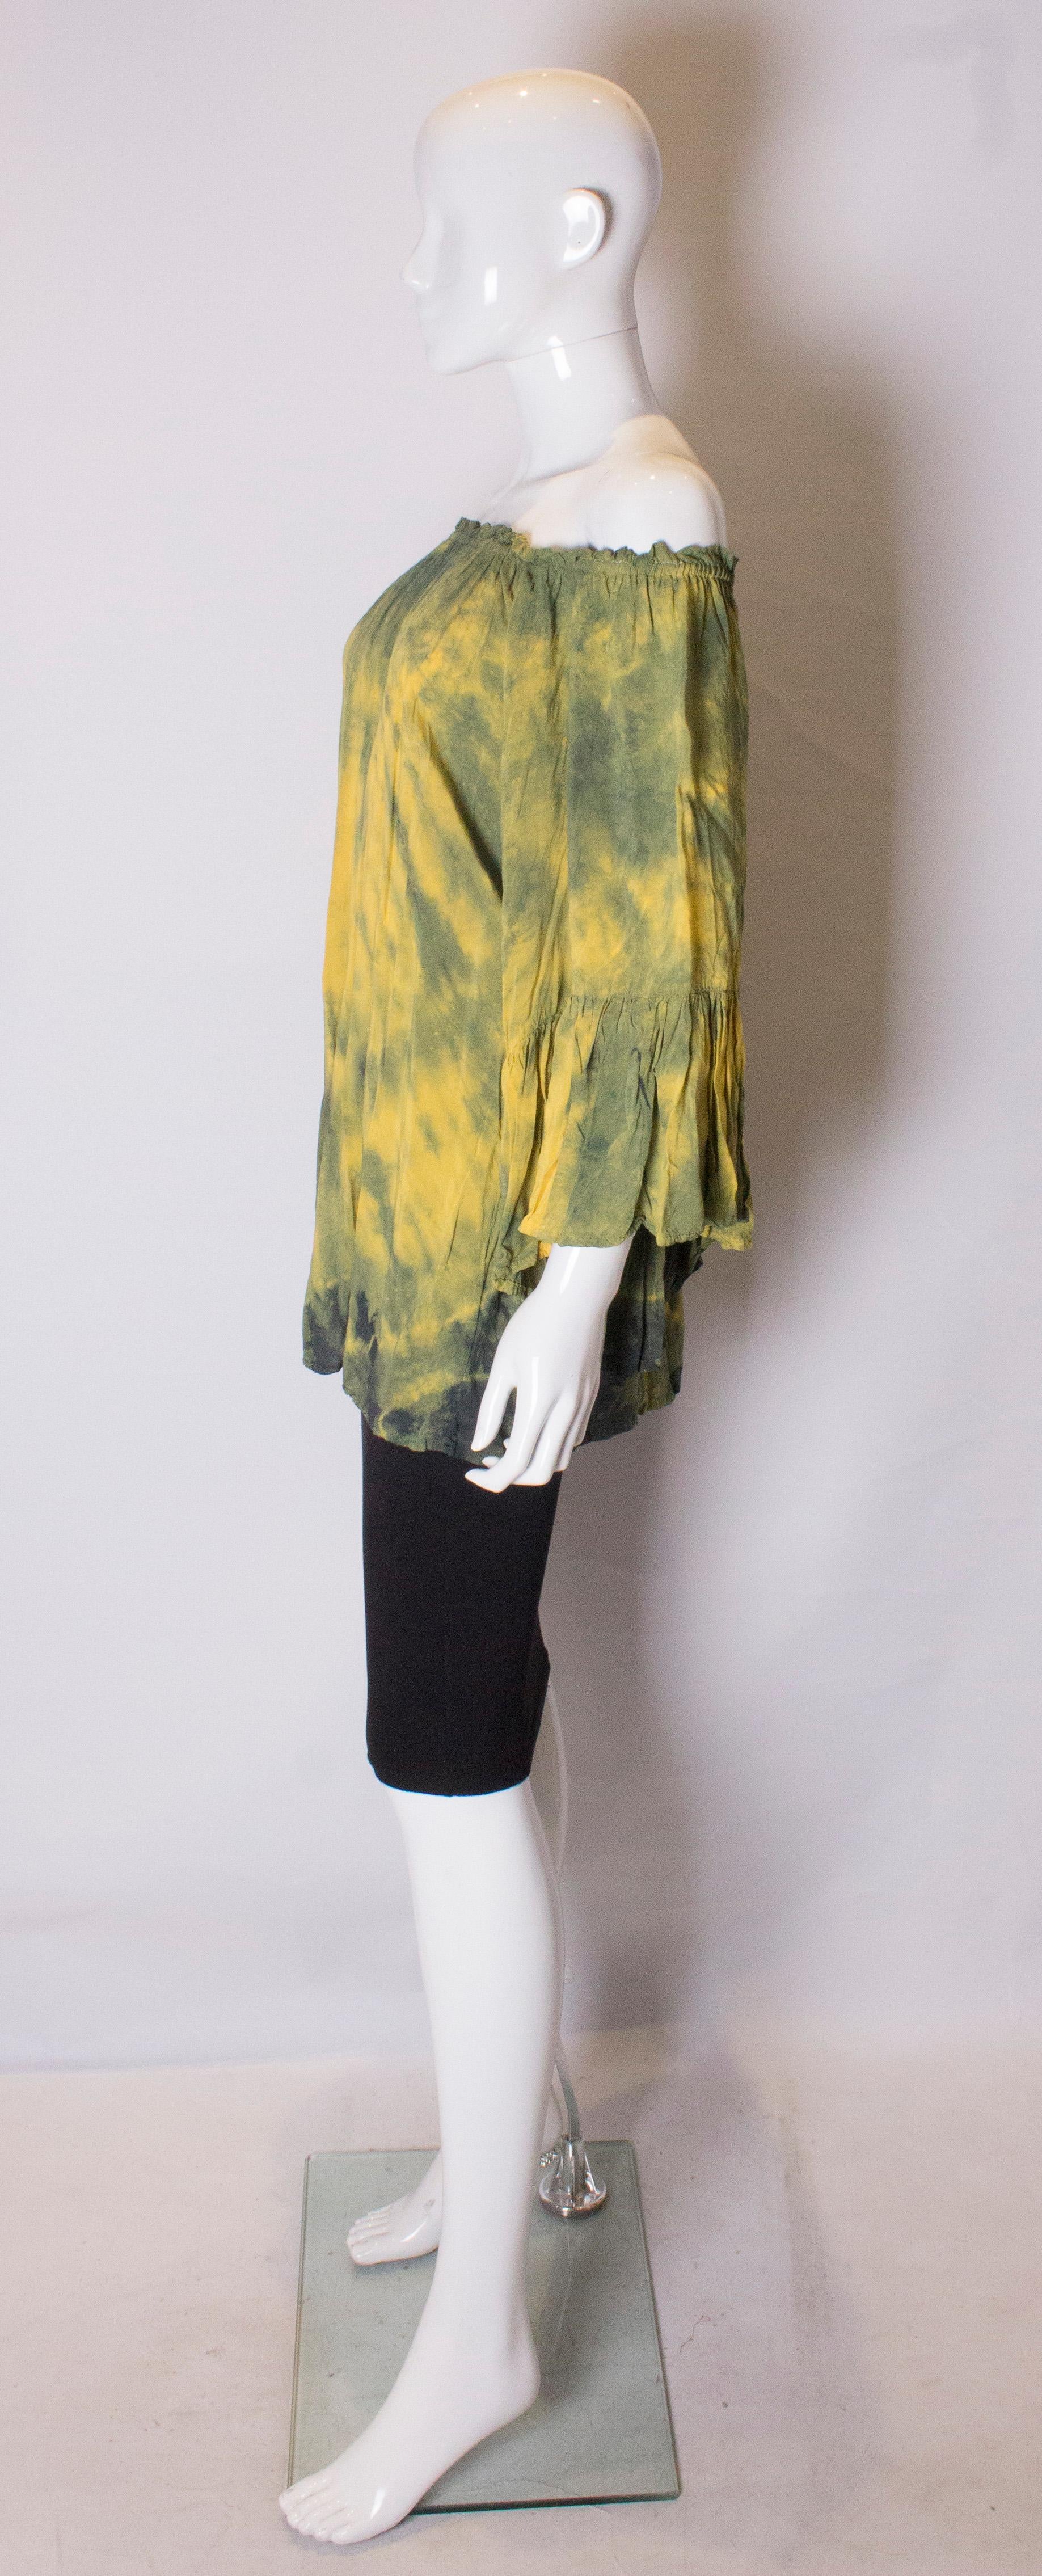 Women's Vintage Boho Tie dye yellow and green top